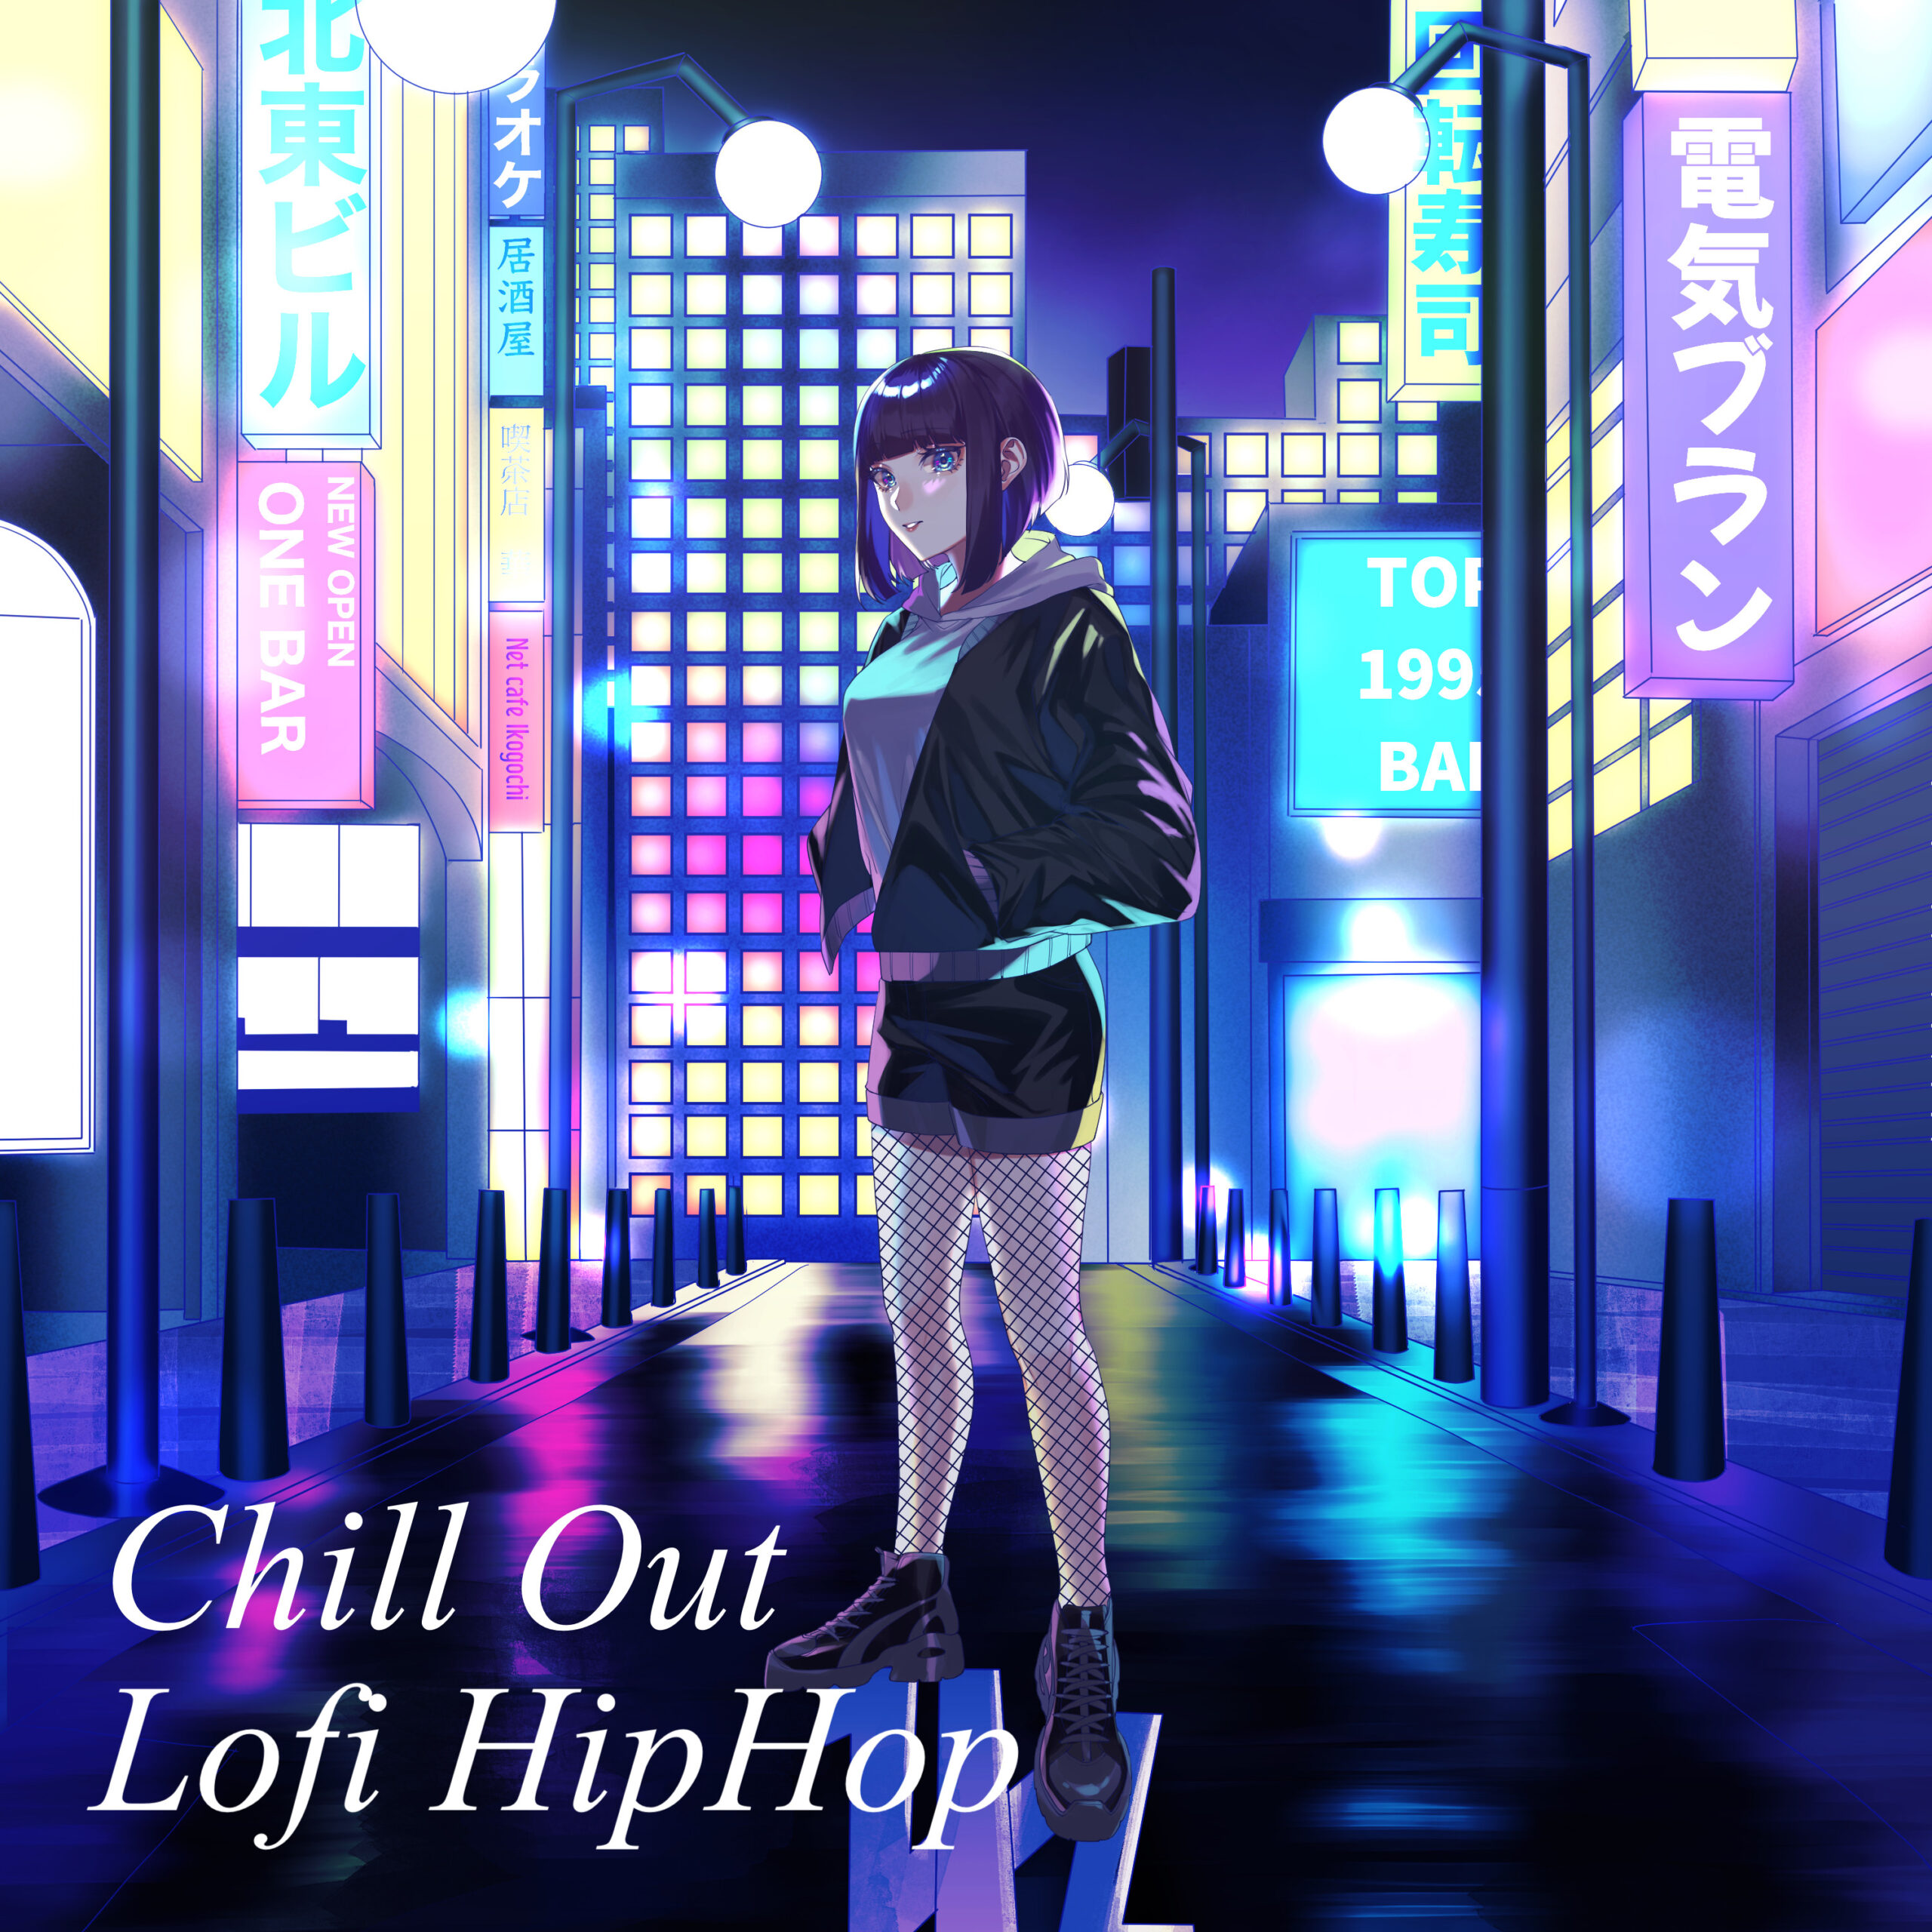 Chill Out Lofi HipHop 作業用、テレワーク用、睡眠用 リラックスできる癒しのLofi ダウンテンポ